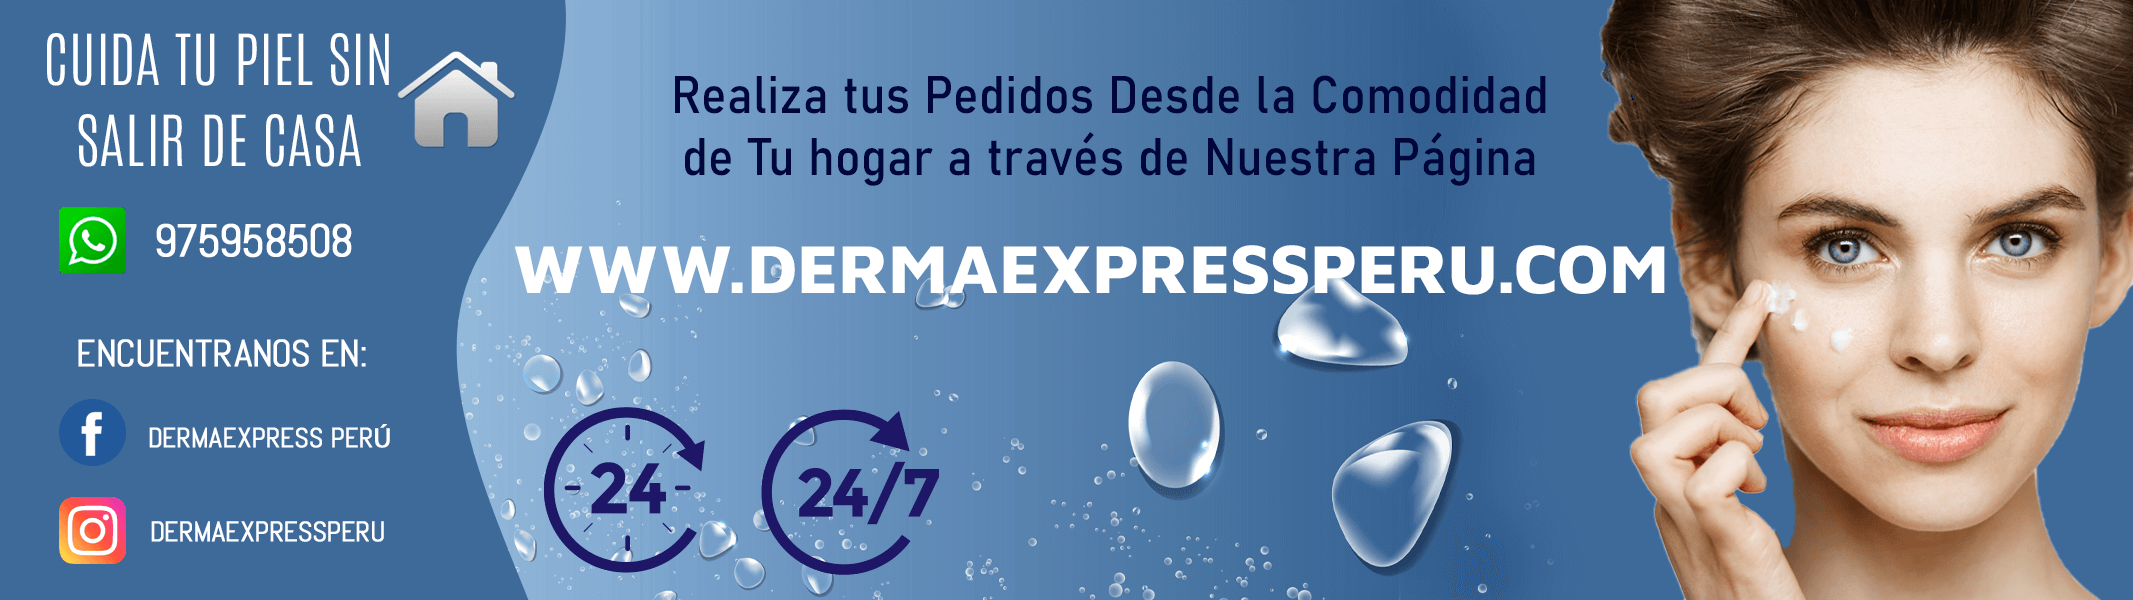 DermaExpress cuida tu piel - Derma Express Perú